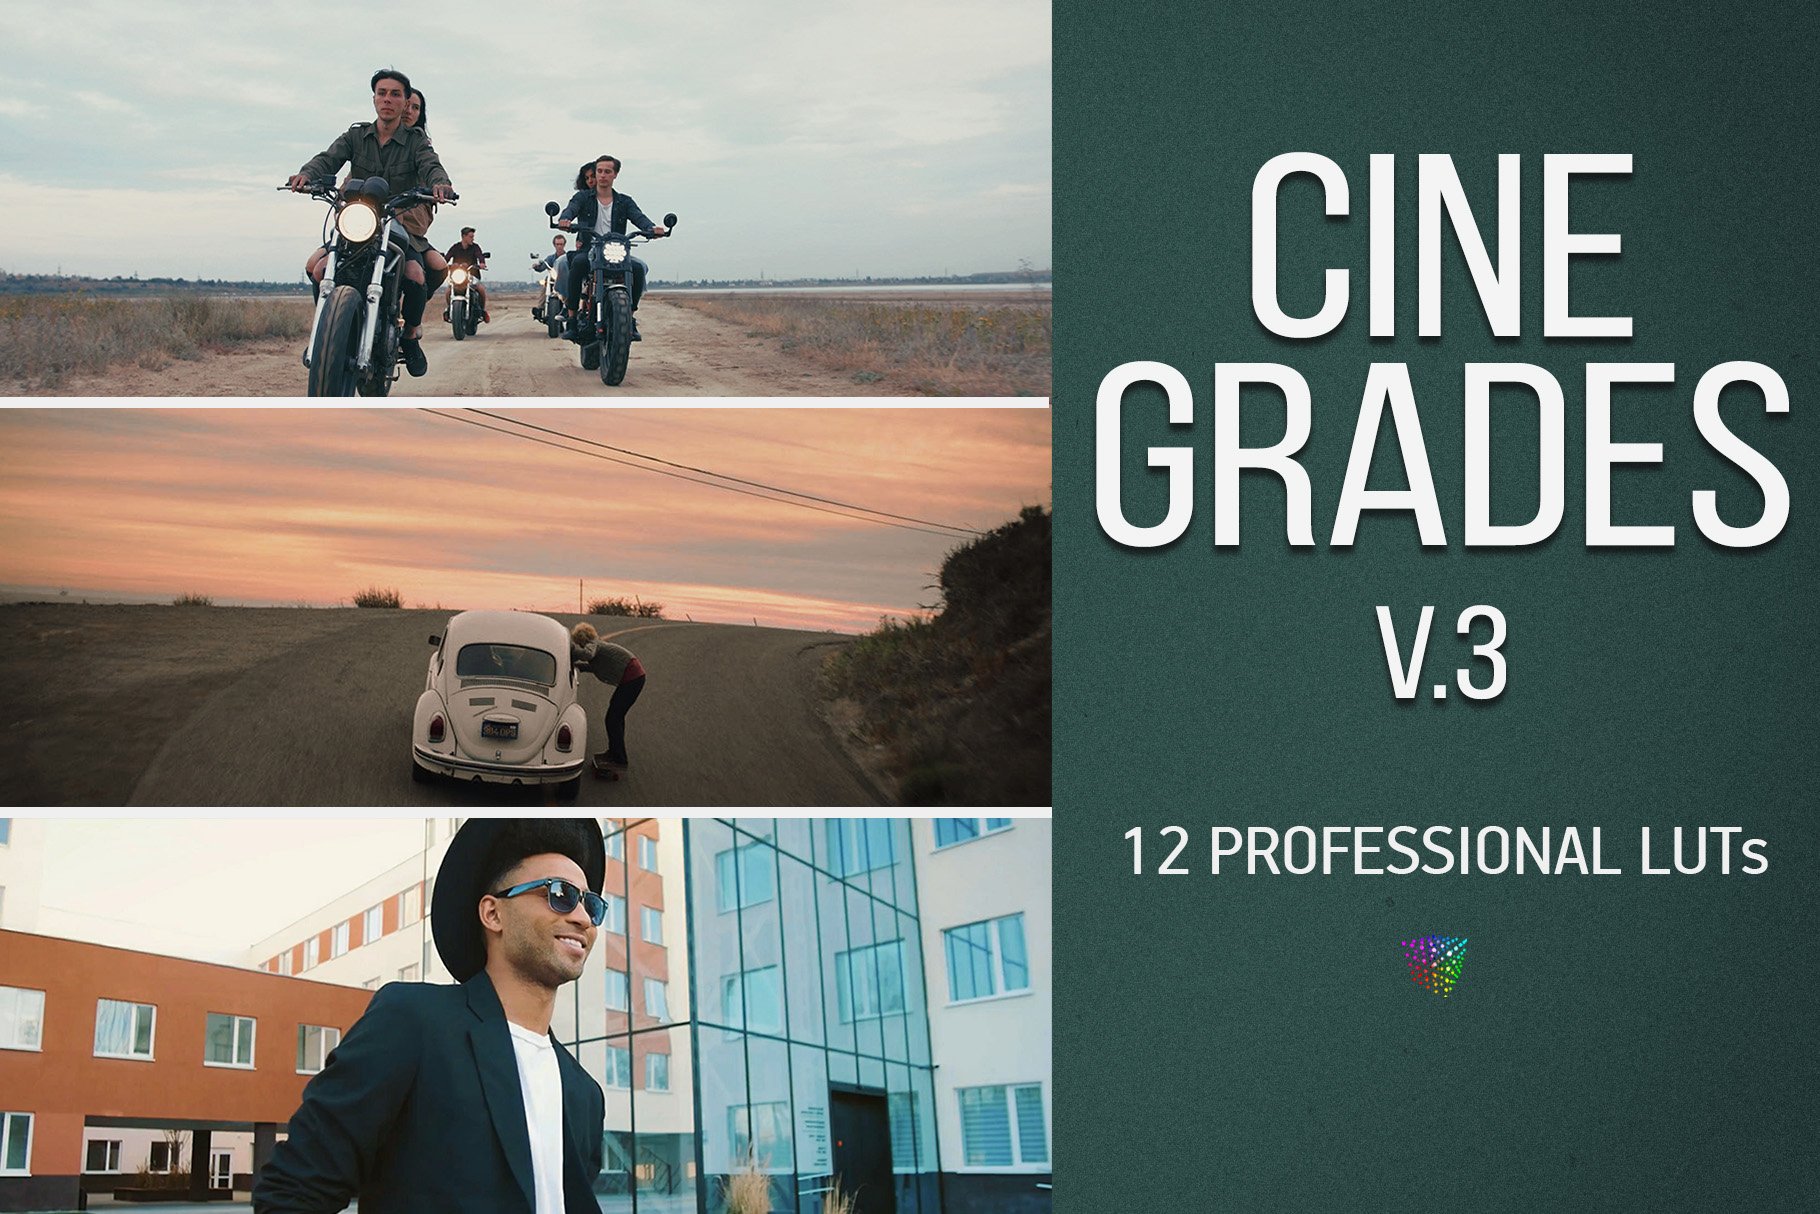 CineGrades LUTs v.3 – Cinematic LUTscover image.